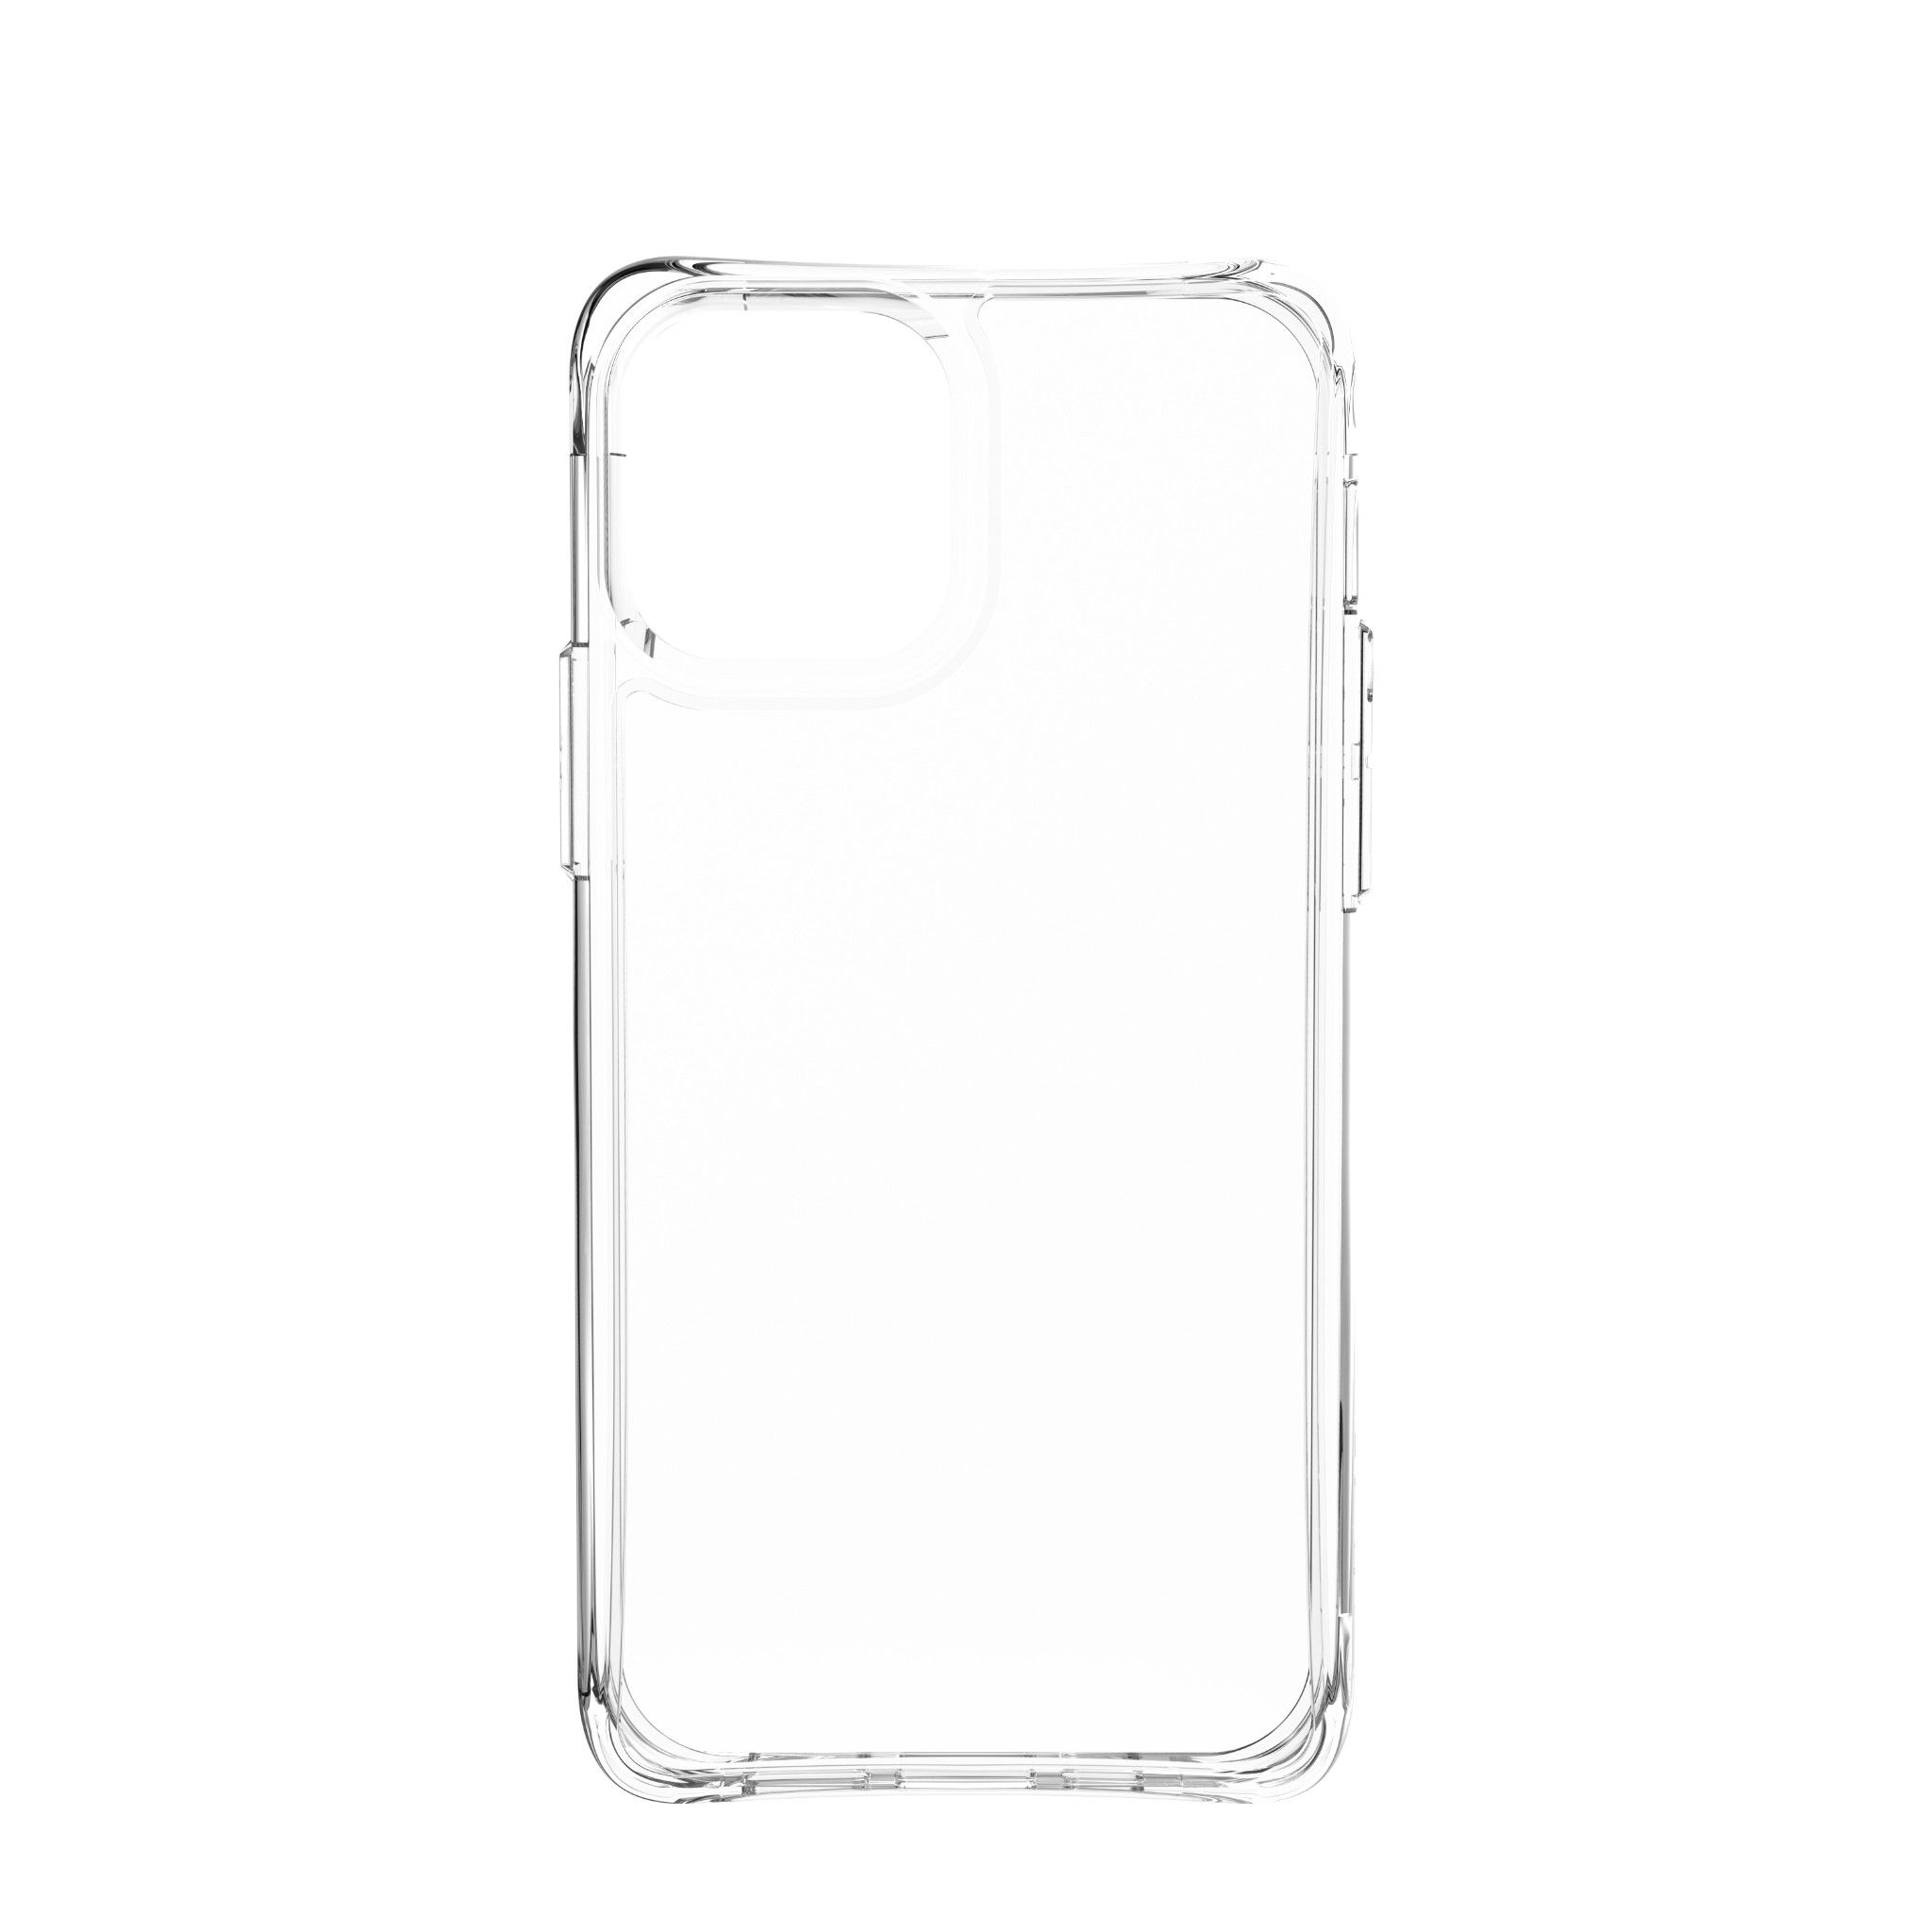  Ốp lưng Plyo cho iPhone 12 Pro [6.1 inch] 